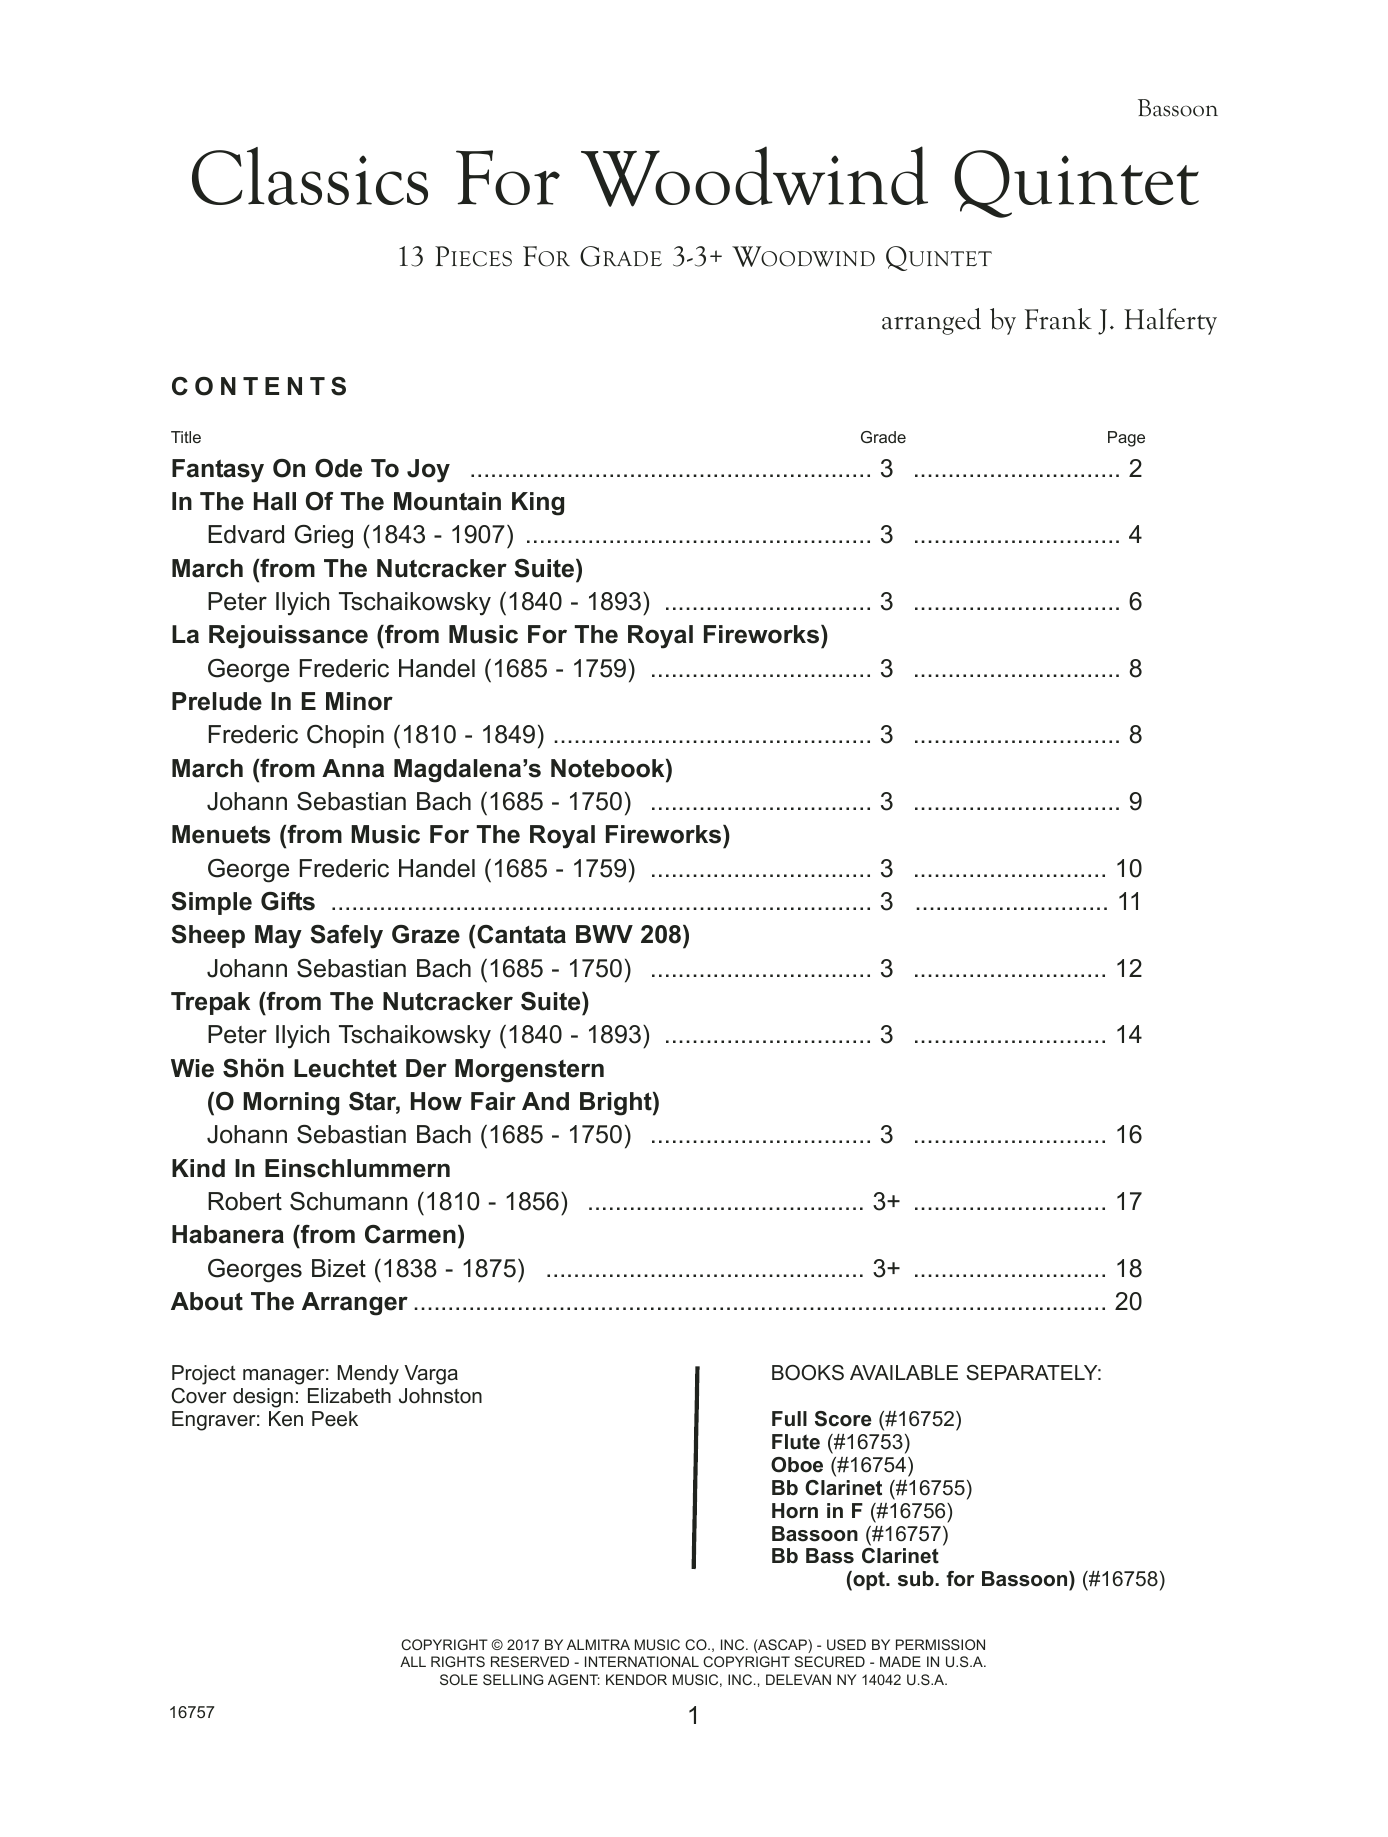 Download Frank J. Halferty Classics For Woodwind Quintet - Bassoon Sheet Music